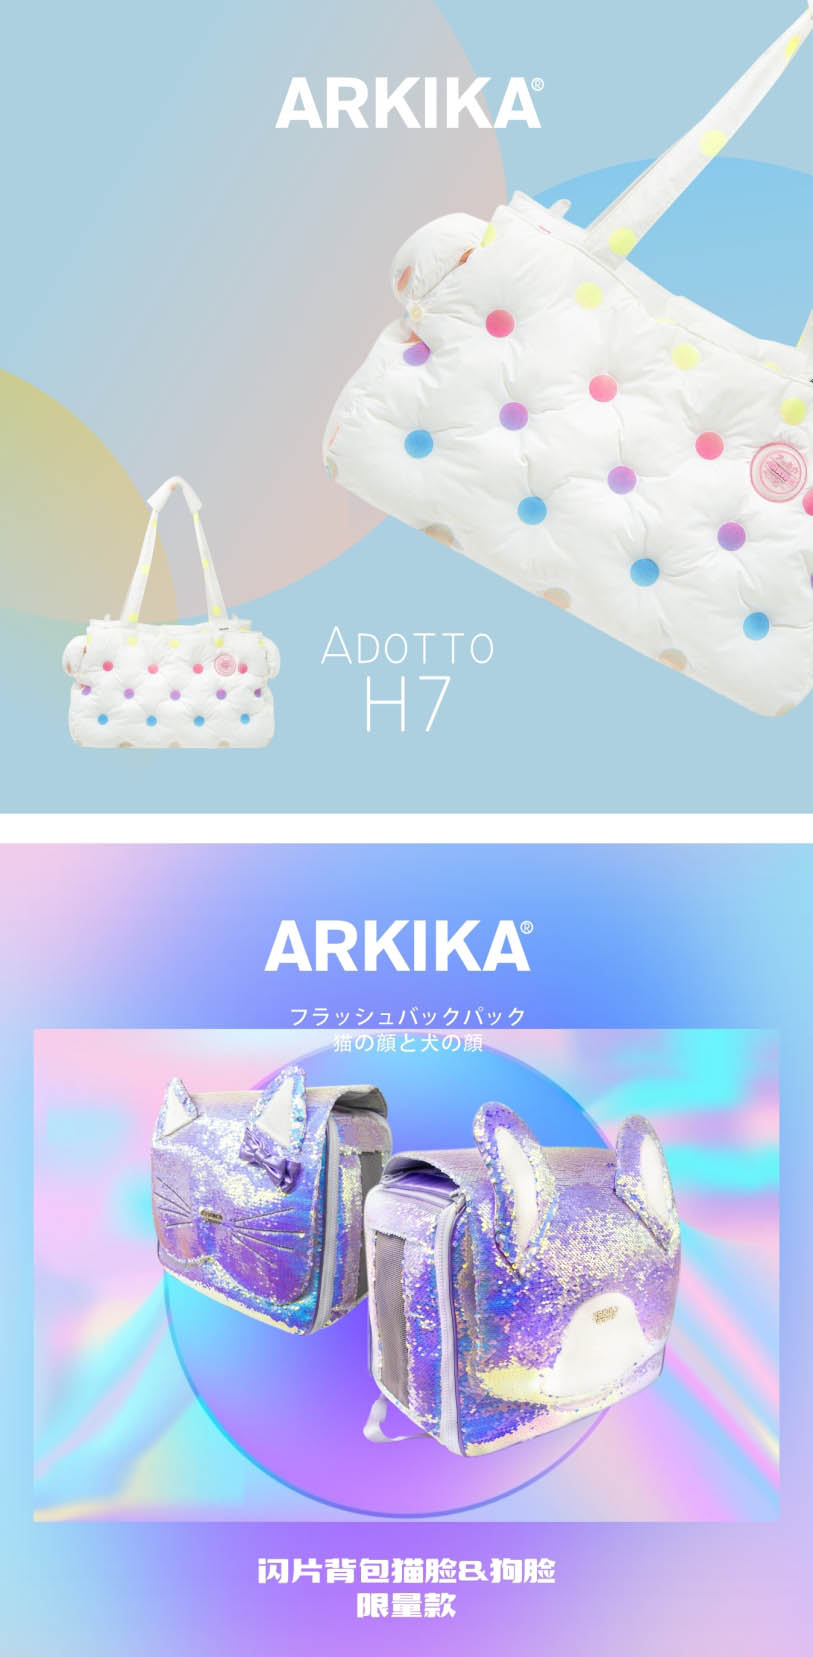 ARKIKA产品活动海报设计